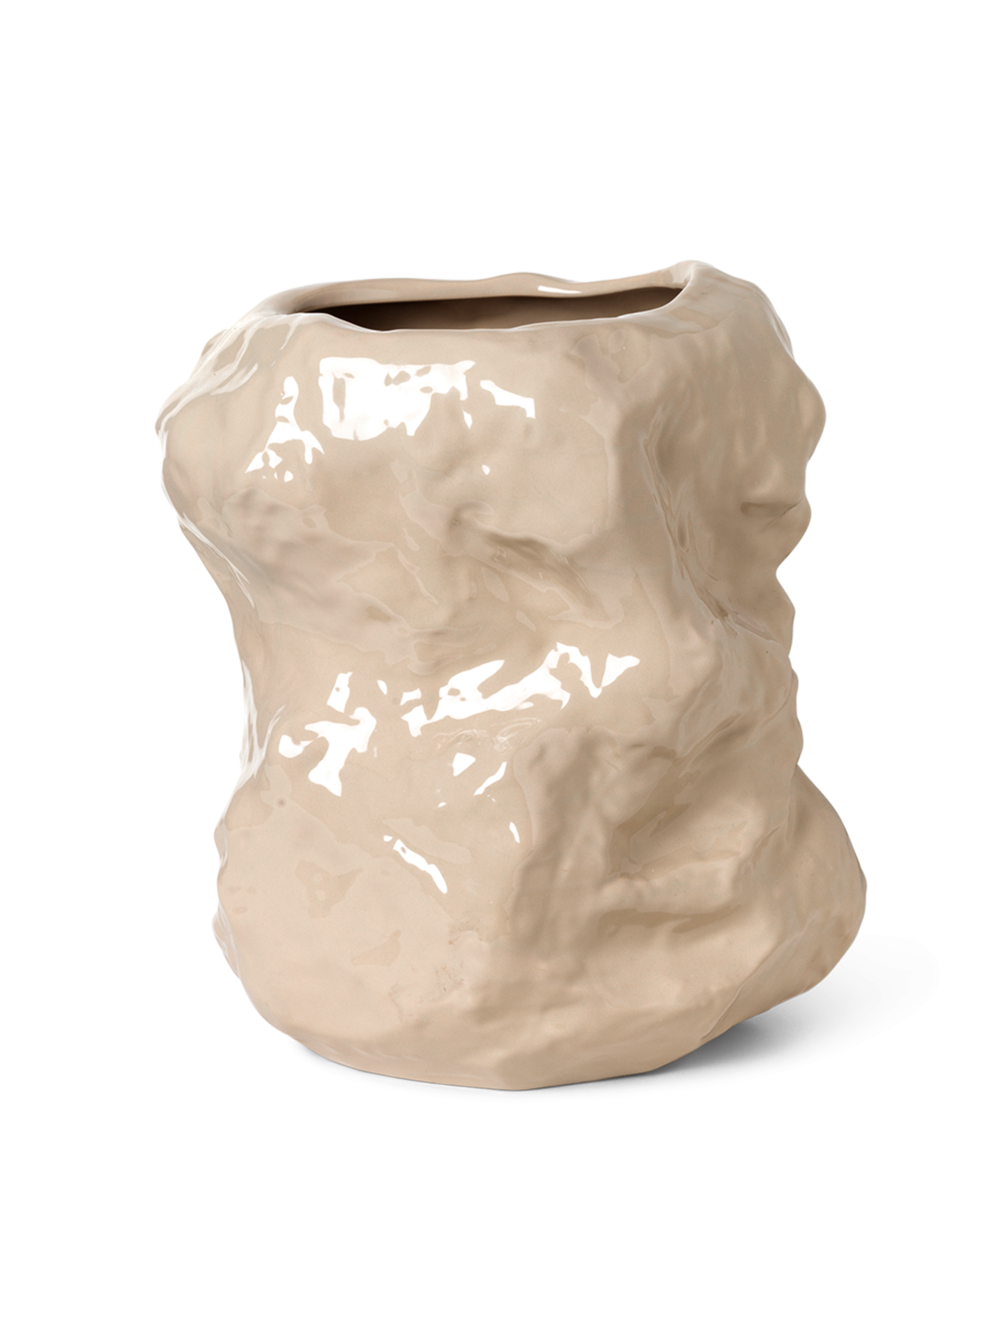 Tuck Vase - Cashmere